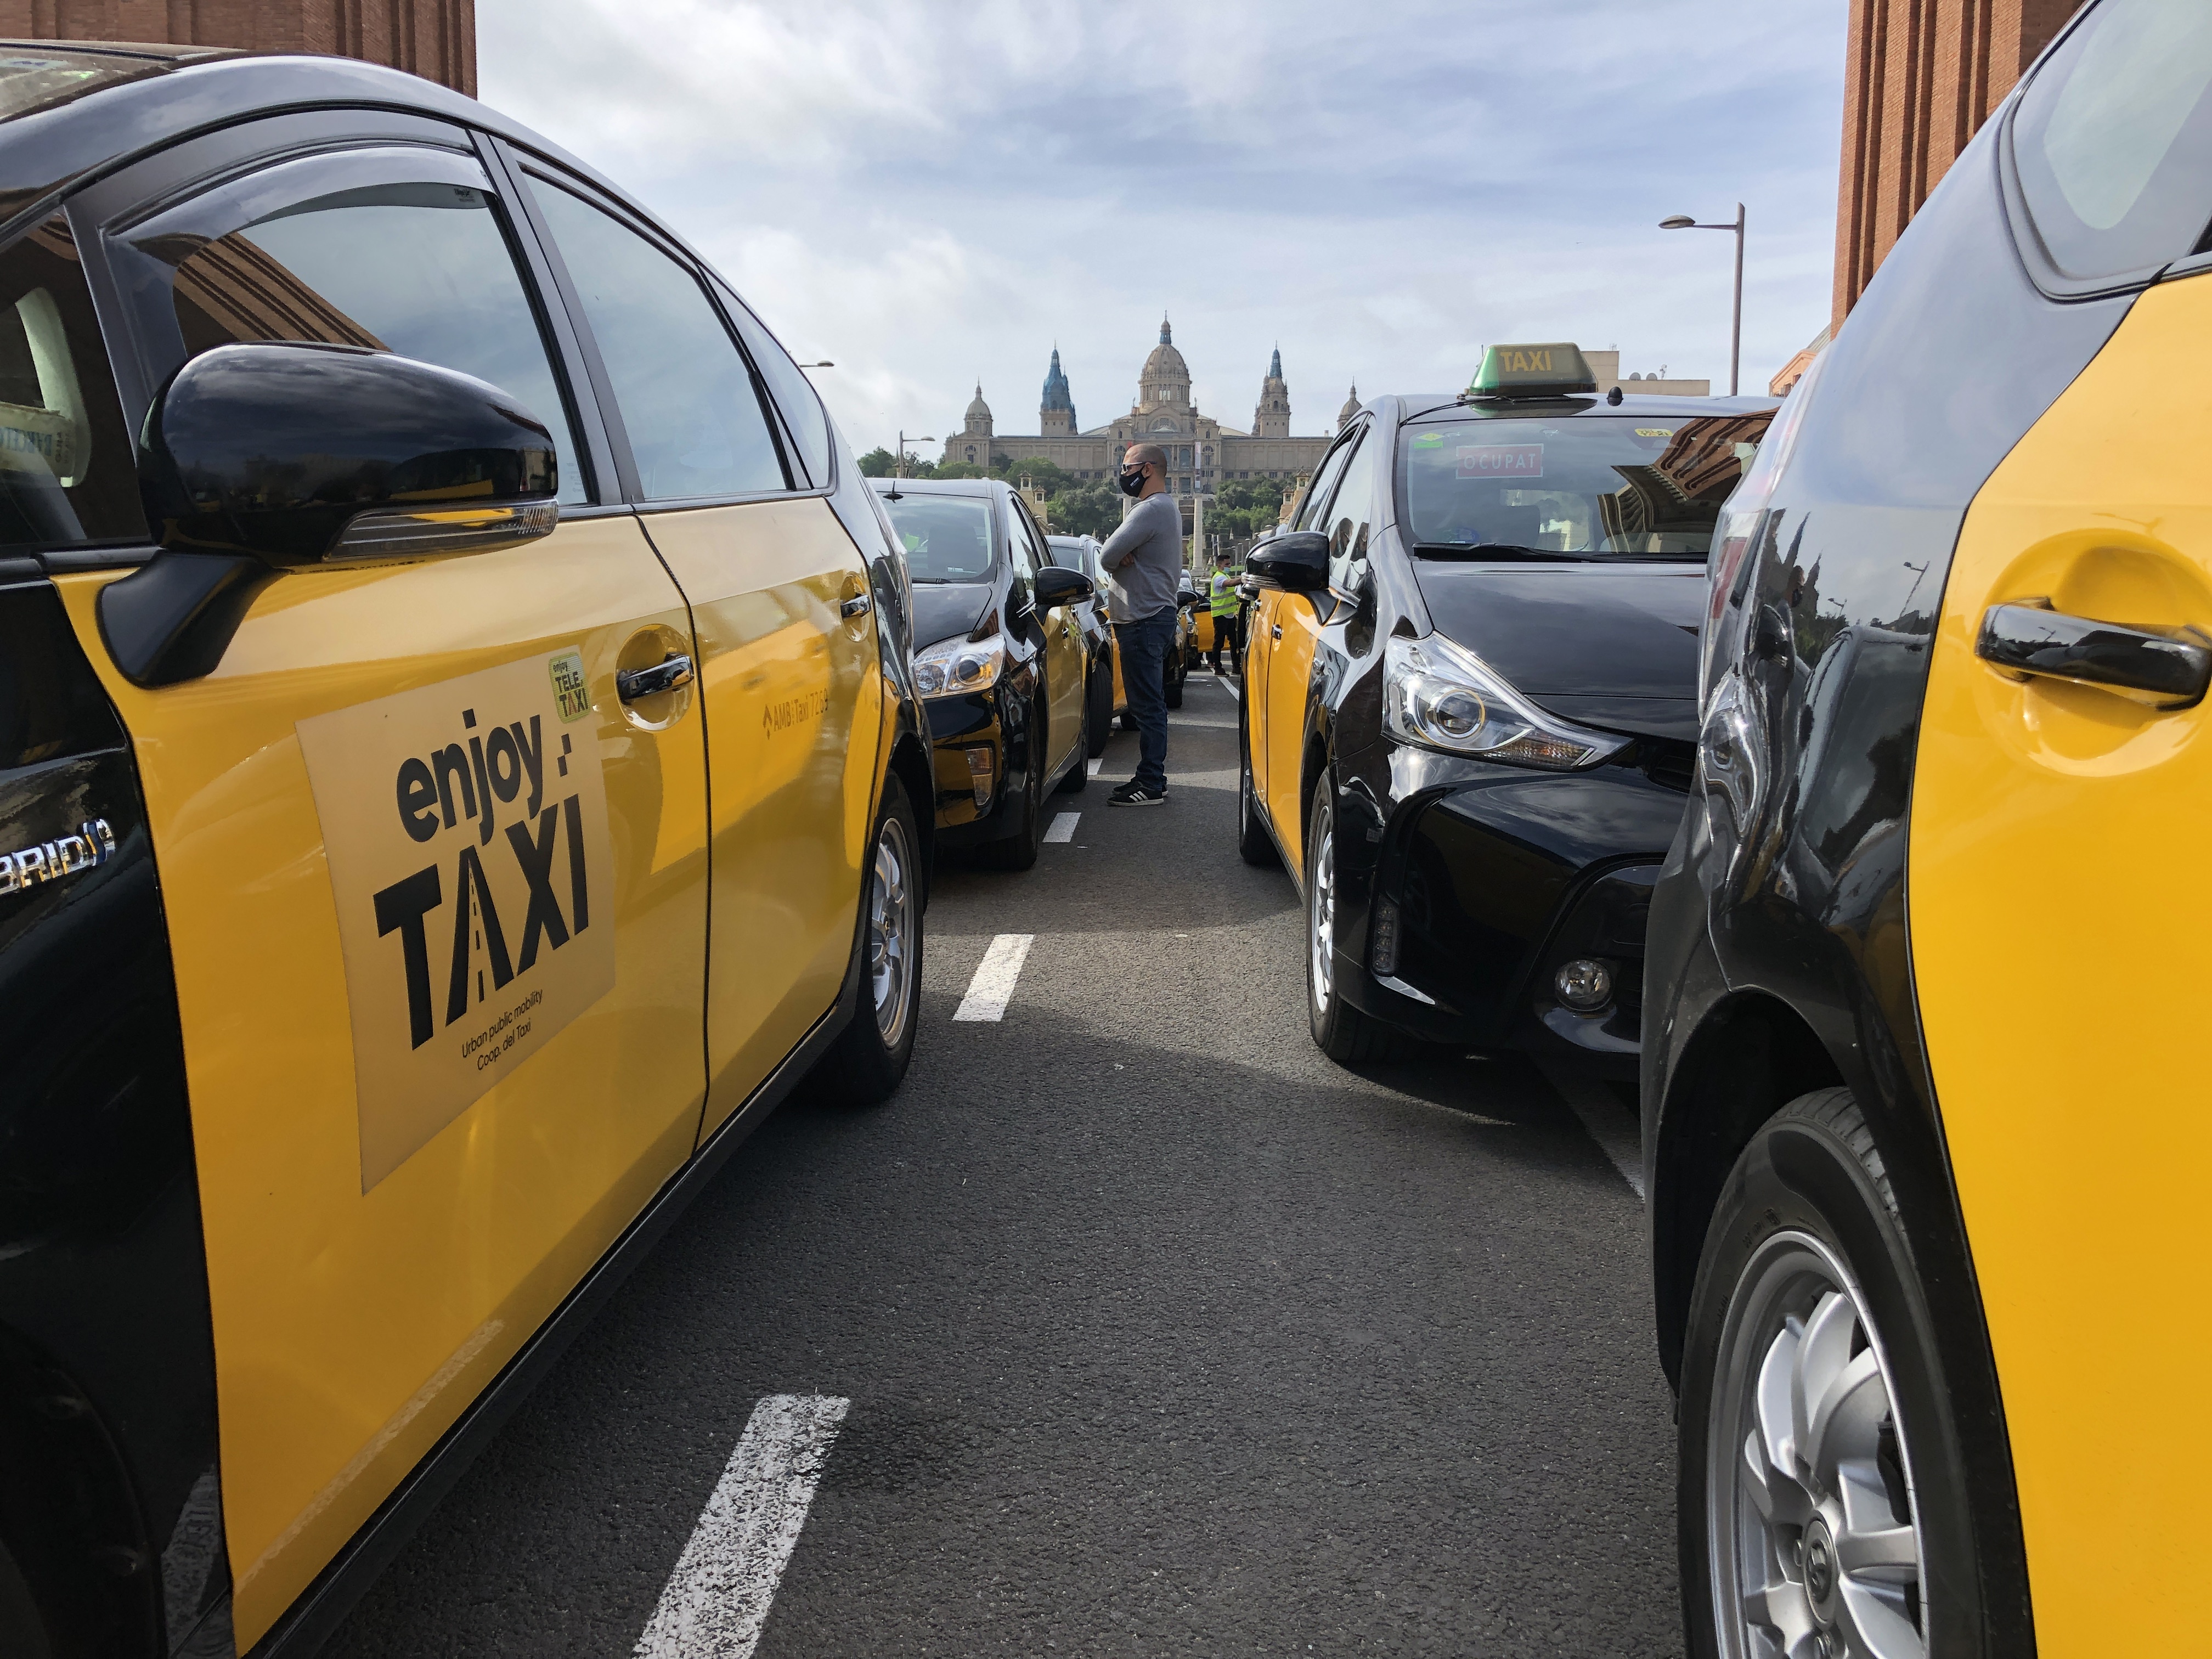 Taxi cars protesting at Plaça Espanya in Barcelona (by Alan Ruíz Terol)